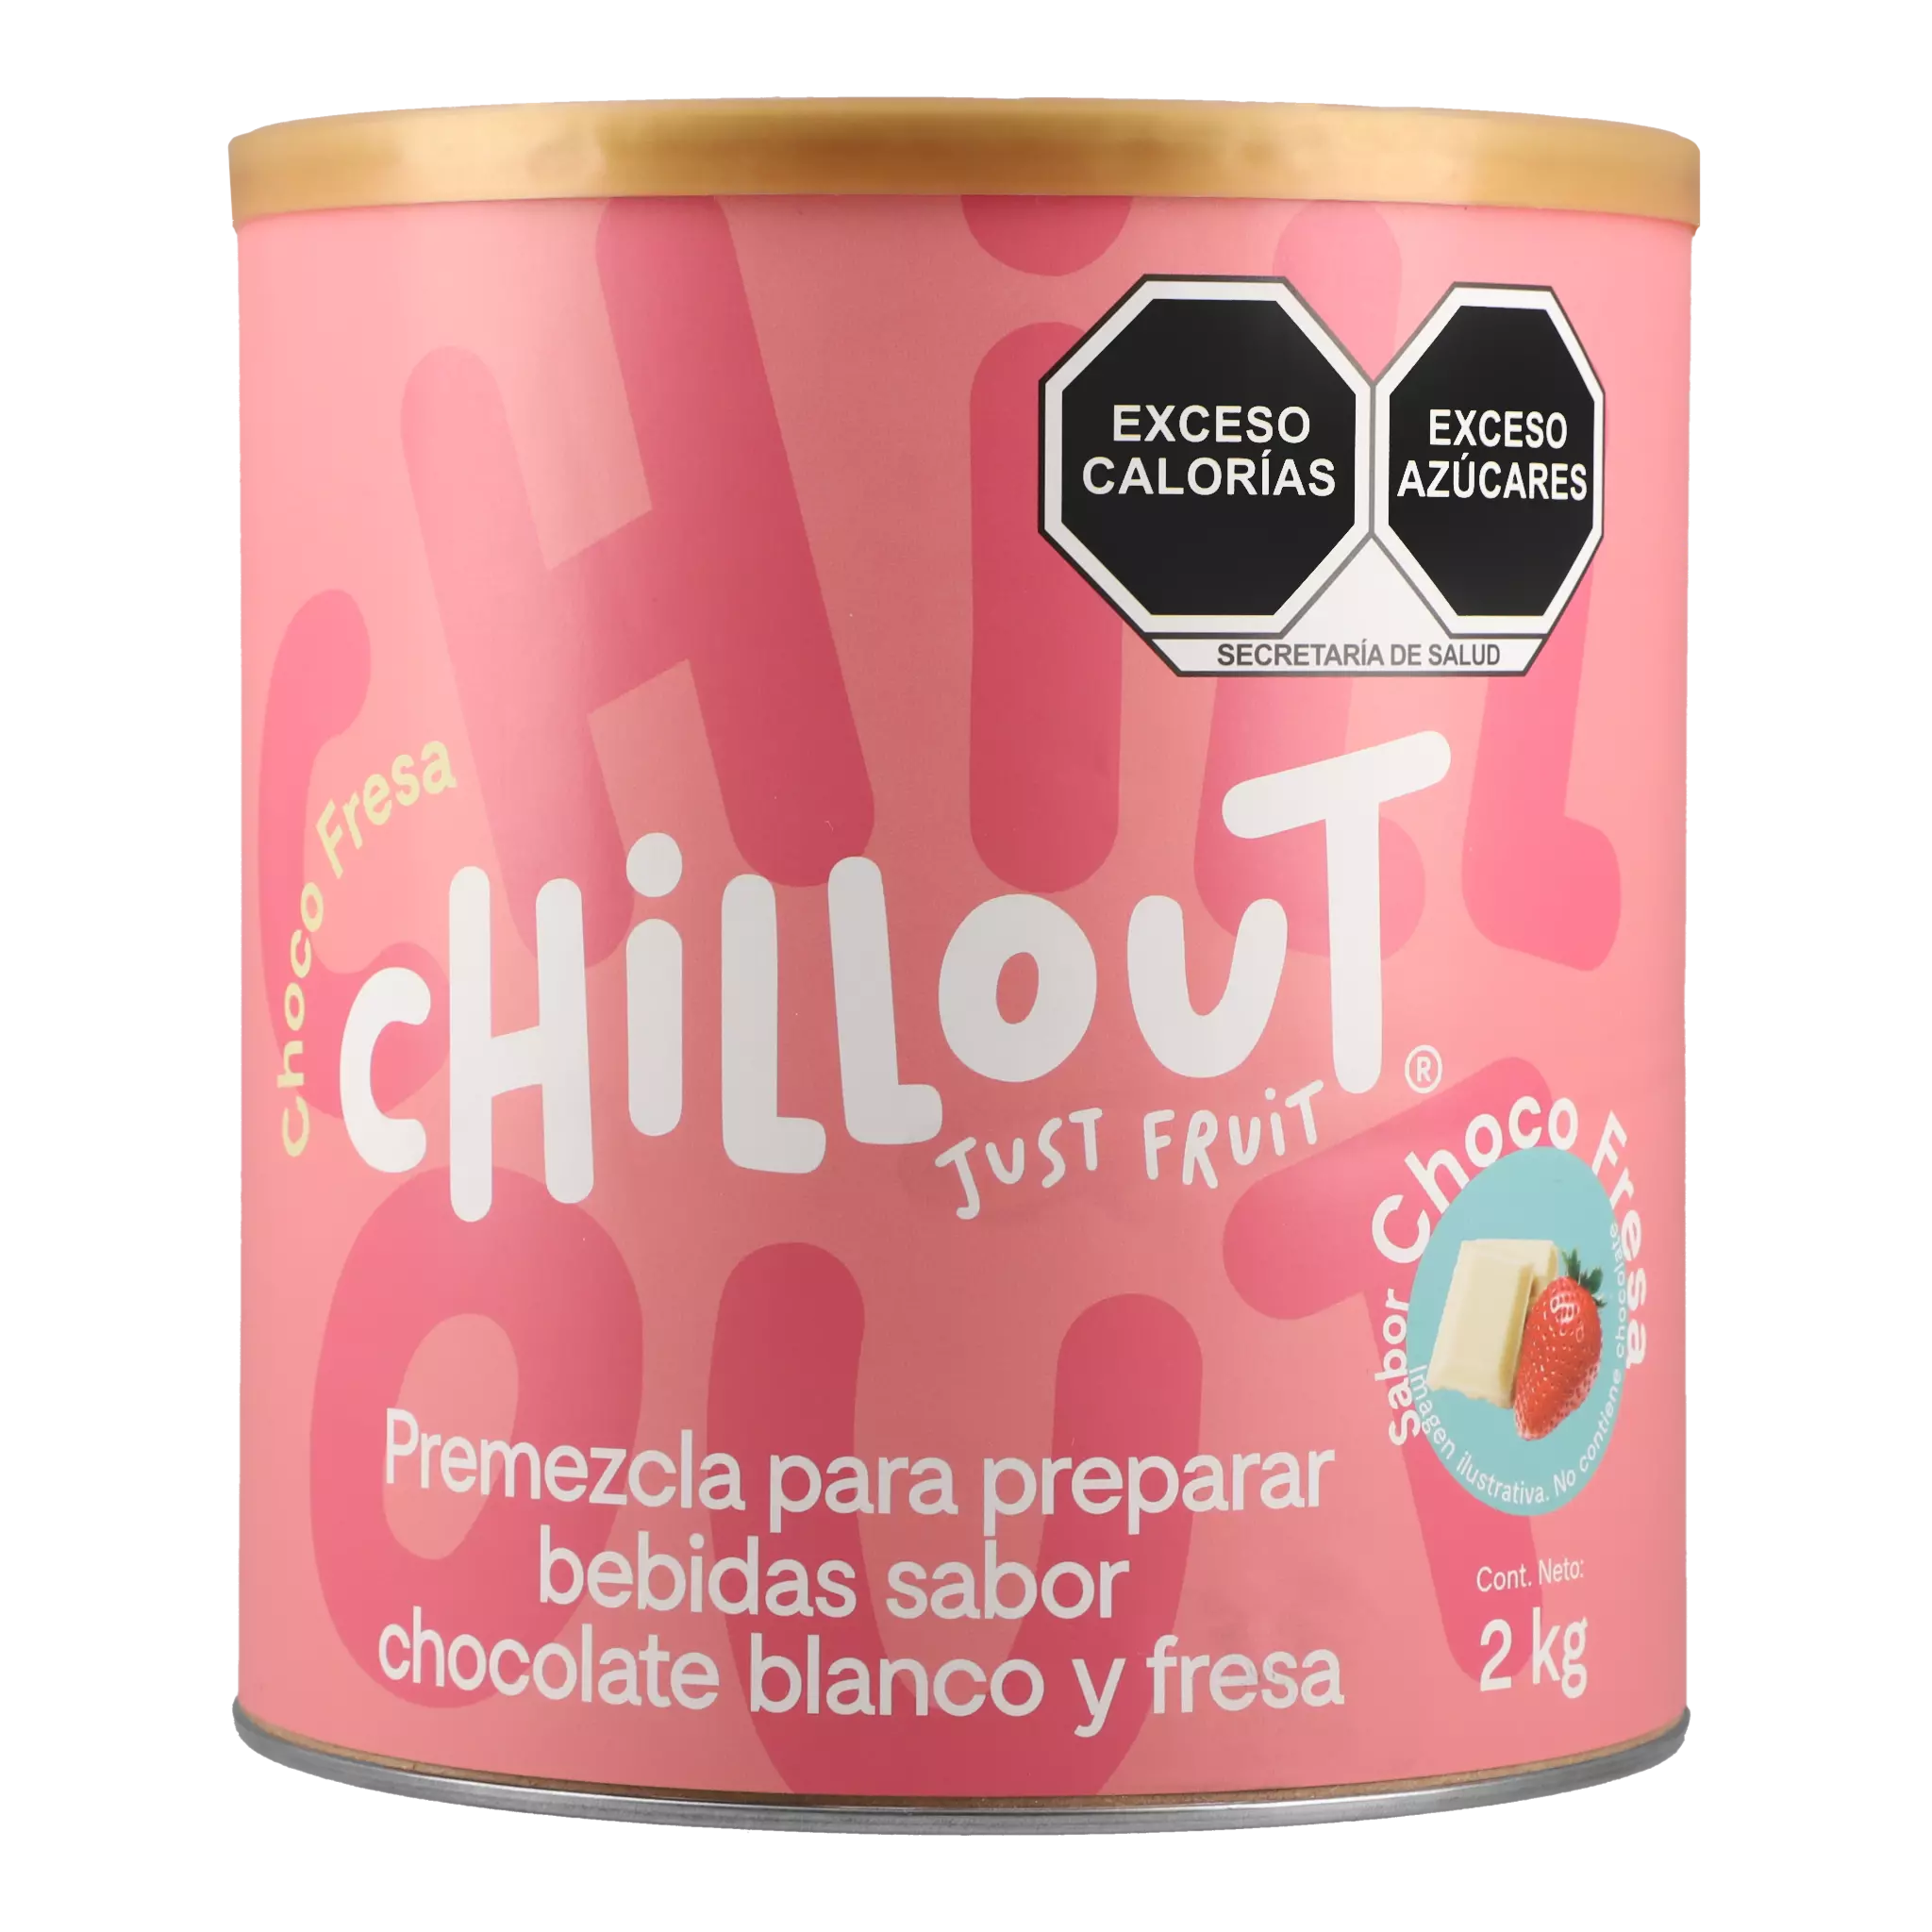 Chillout just fruit base en polvo sabor choco-fresa bote 2 kg